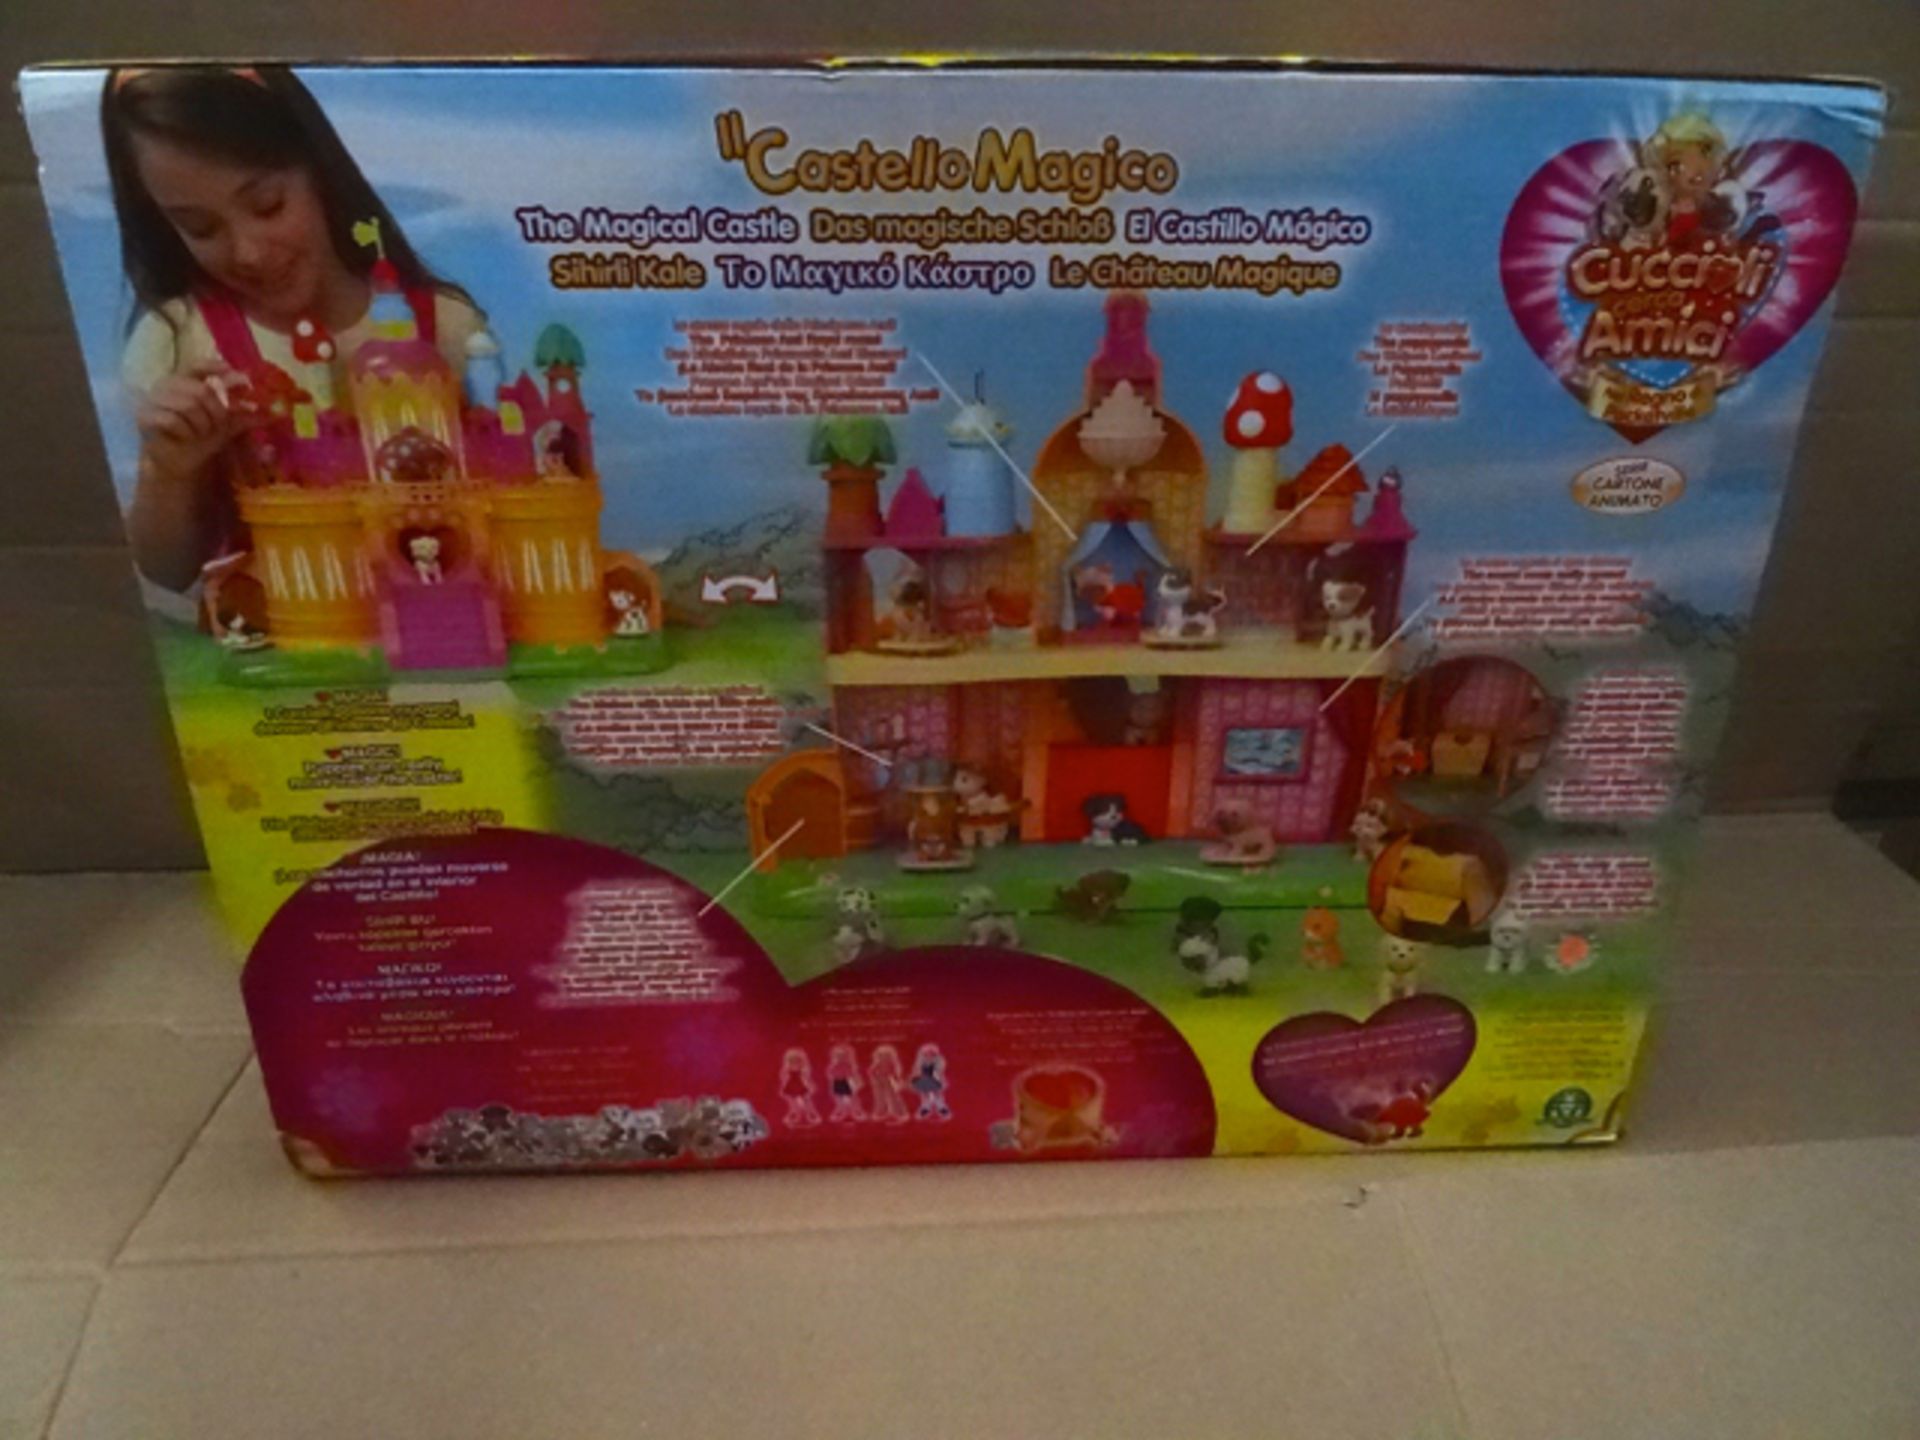 4 x Cuccili Cerca Amici Castle Magico Large Kids Play set castles! RRP £79.99 Each! Total RRP £319. - Image 4 of 4